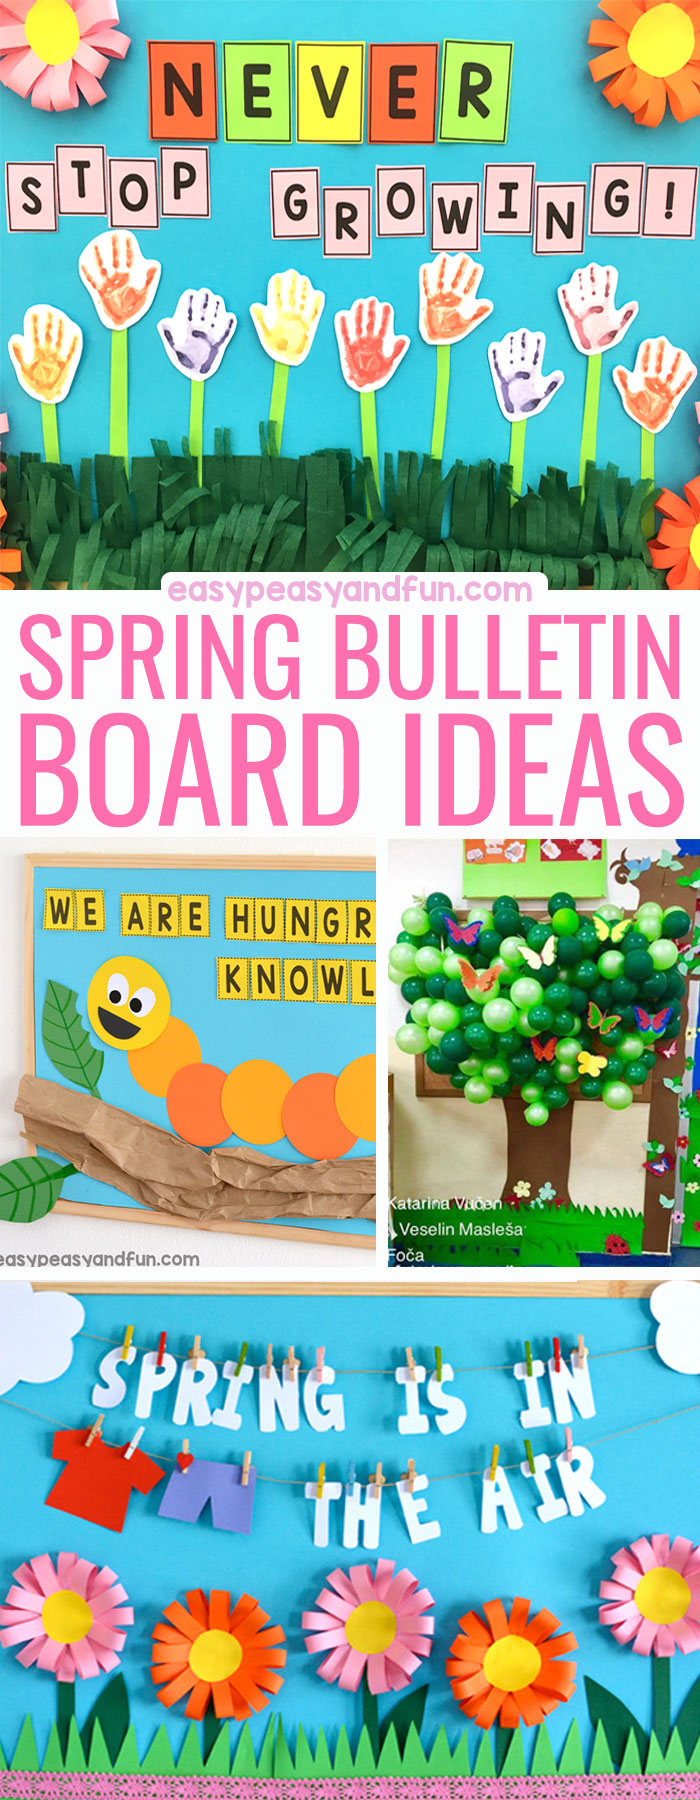 Wonderful Spring Bulletin Board Ideas for Your Classroom